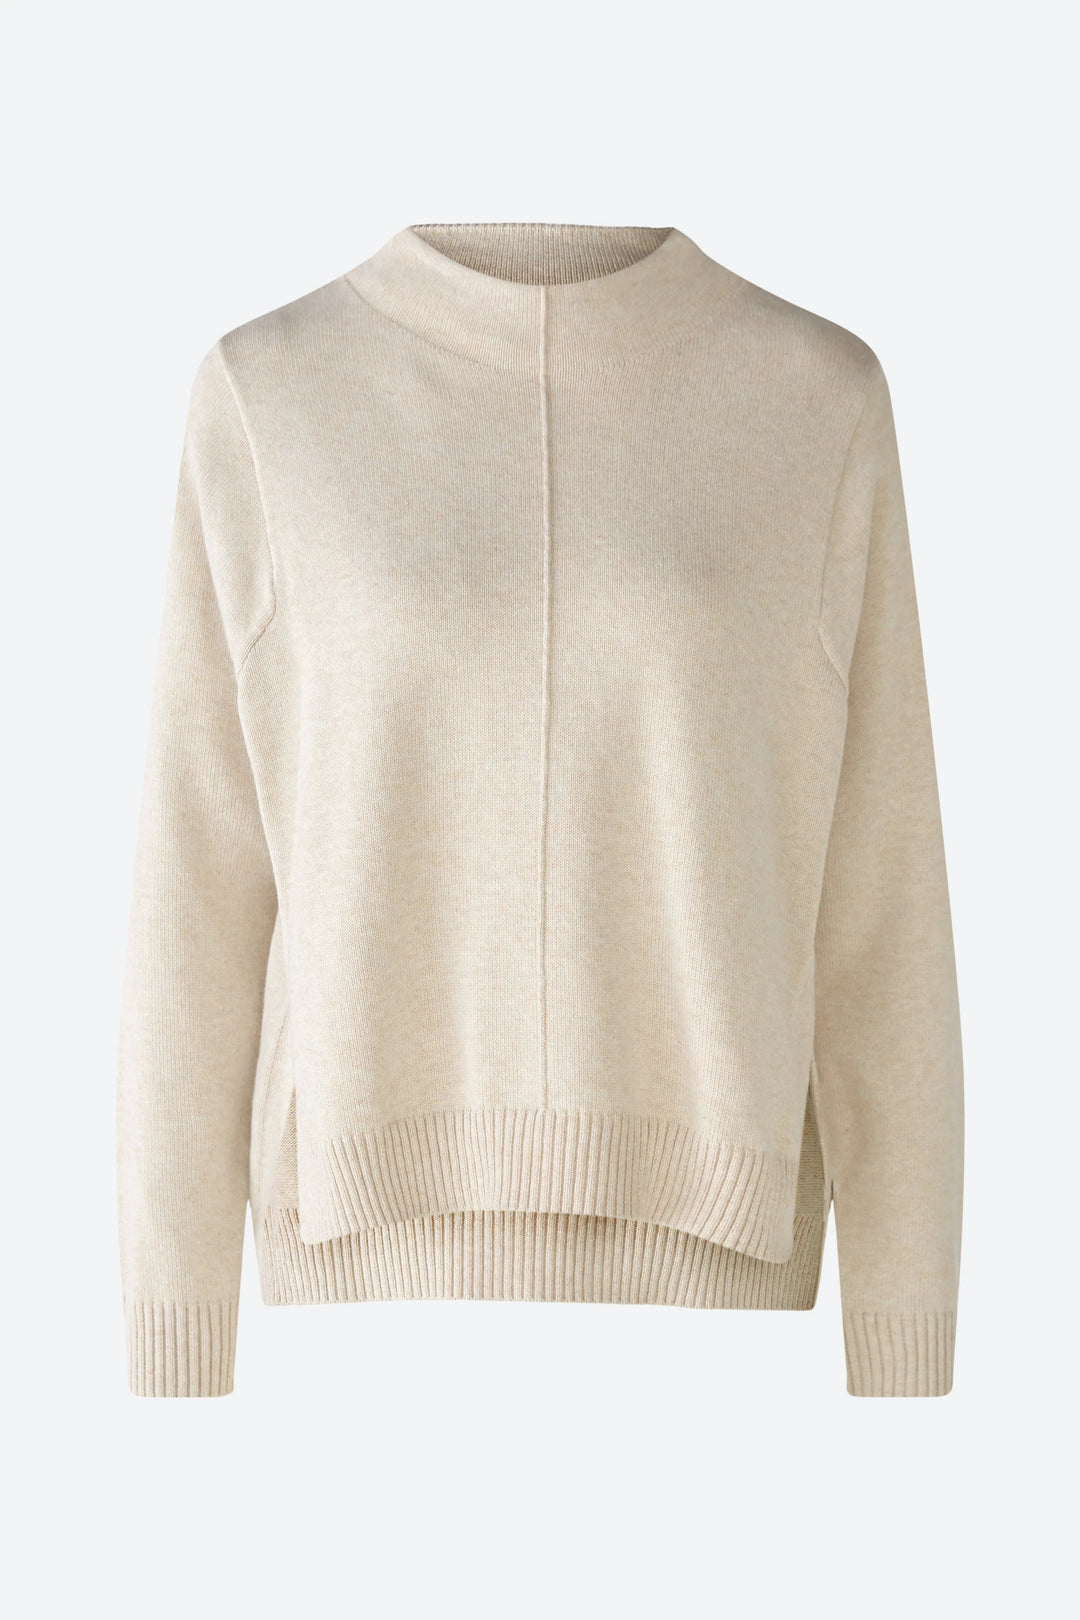 Cotton-viscose blend sweater